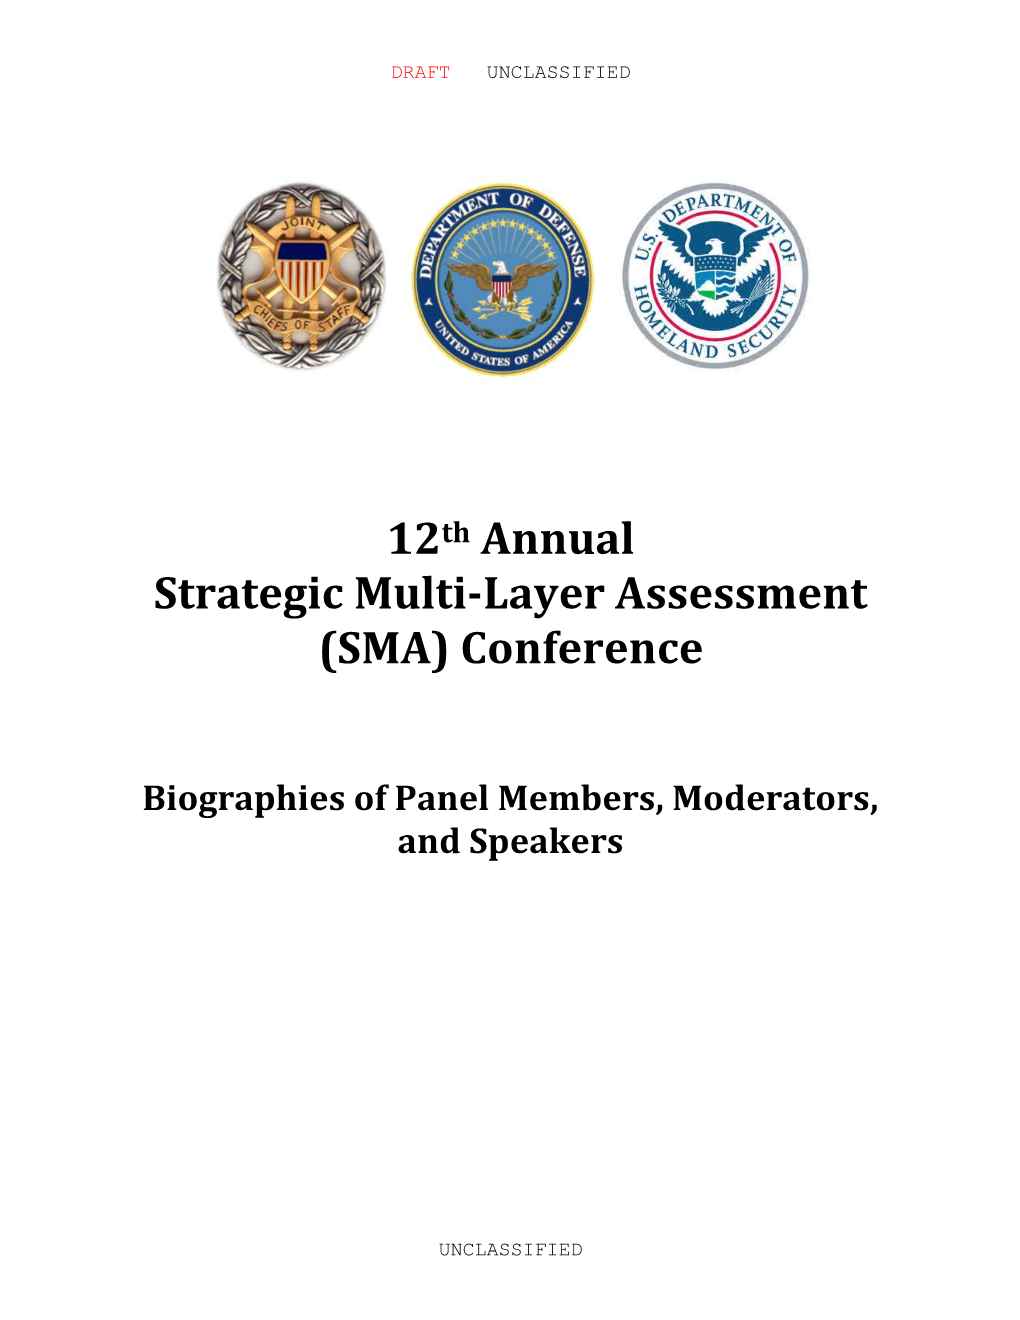 SMA) Conference